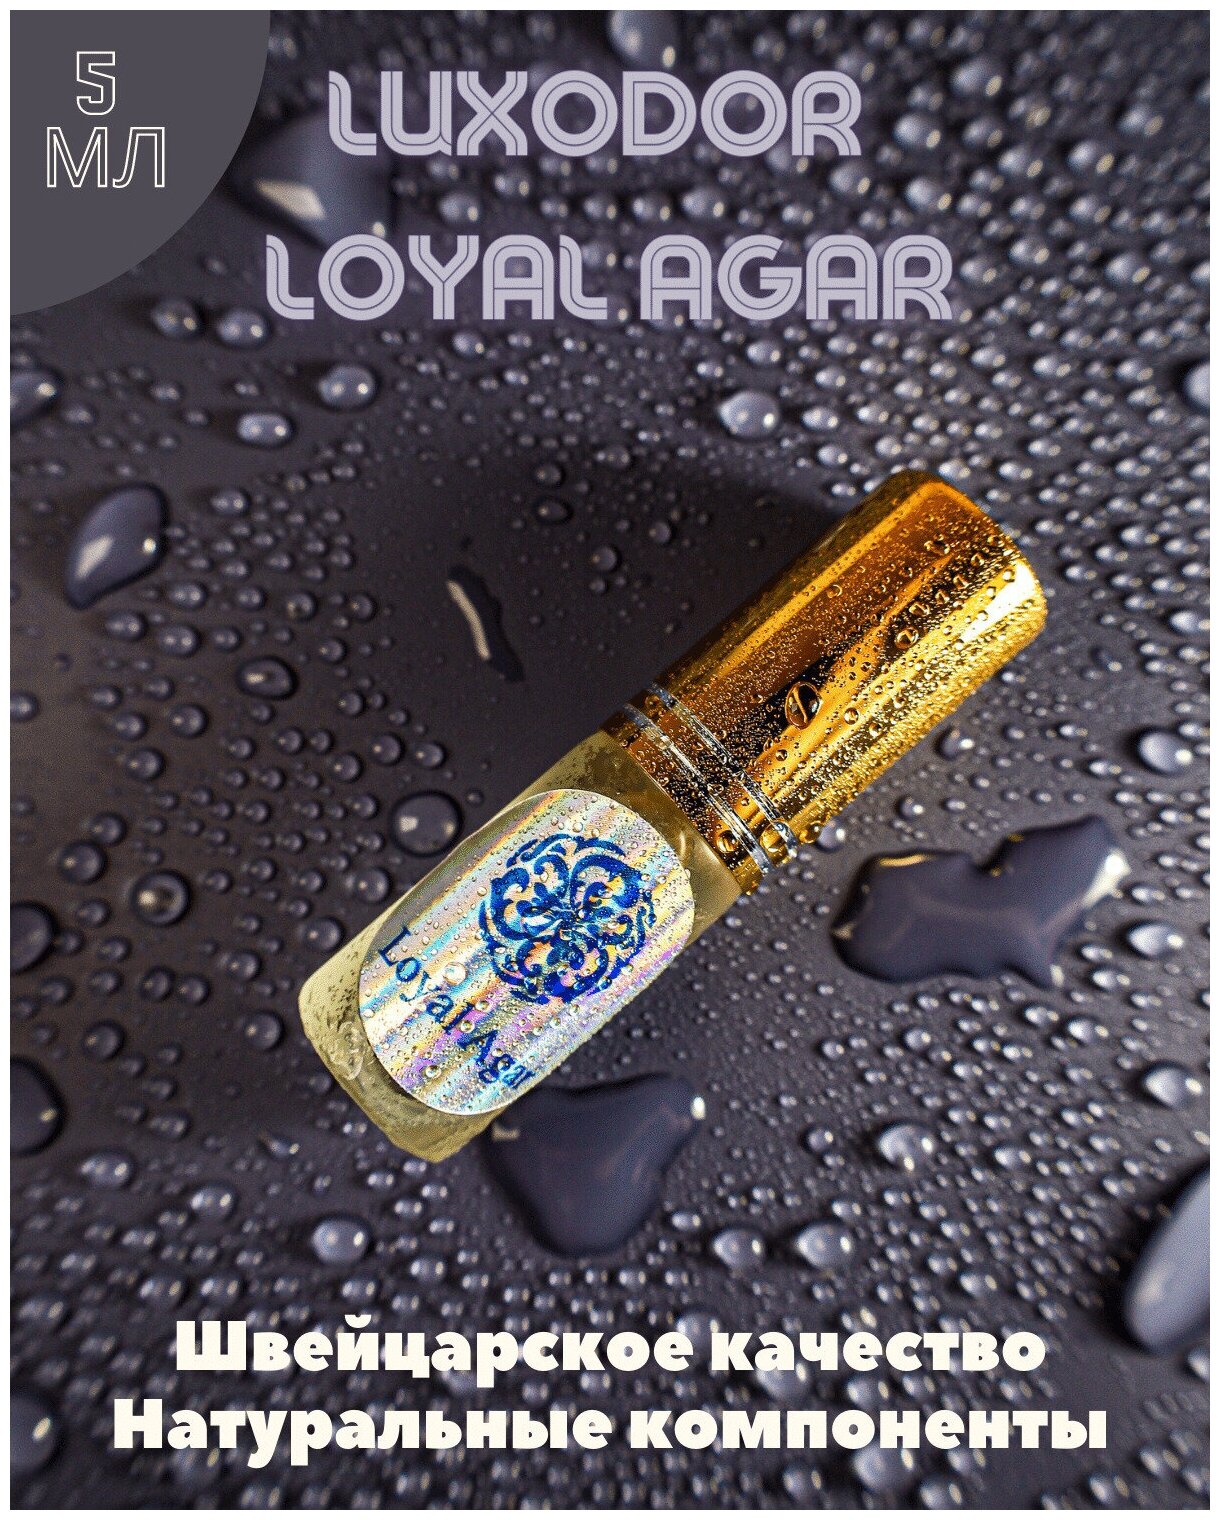 Luxodor Loyal Agar духи мужские 5 мл /парфюм мужской/духи для мужчин/селективная парфюмерия / духи